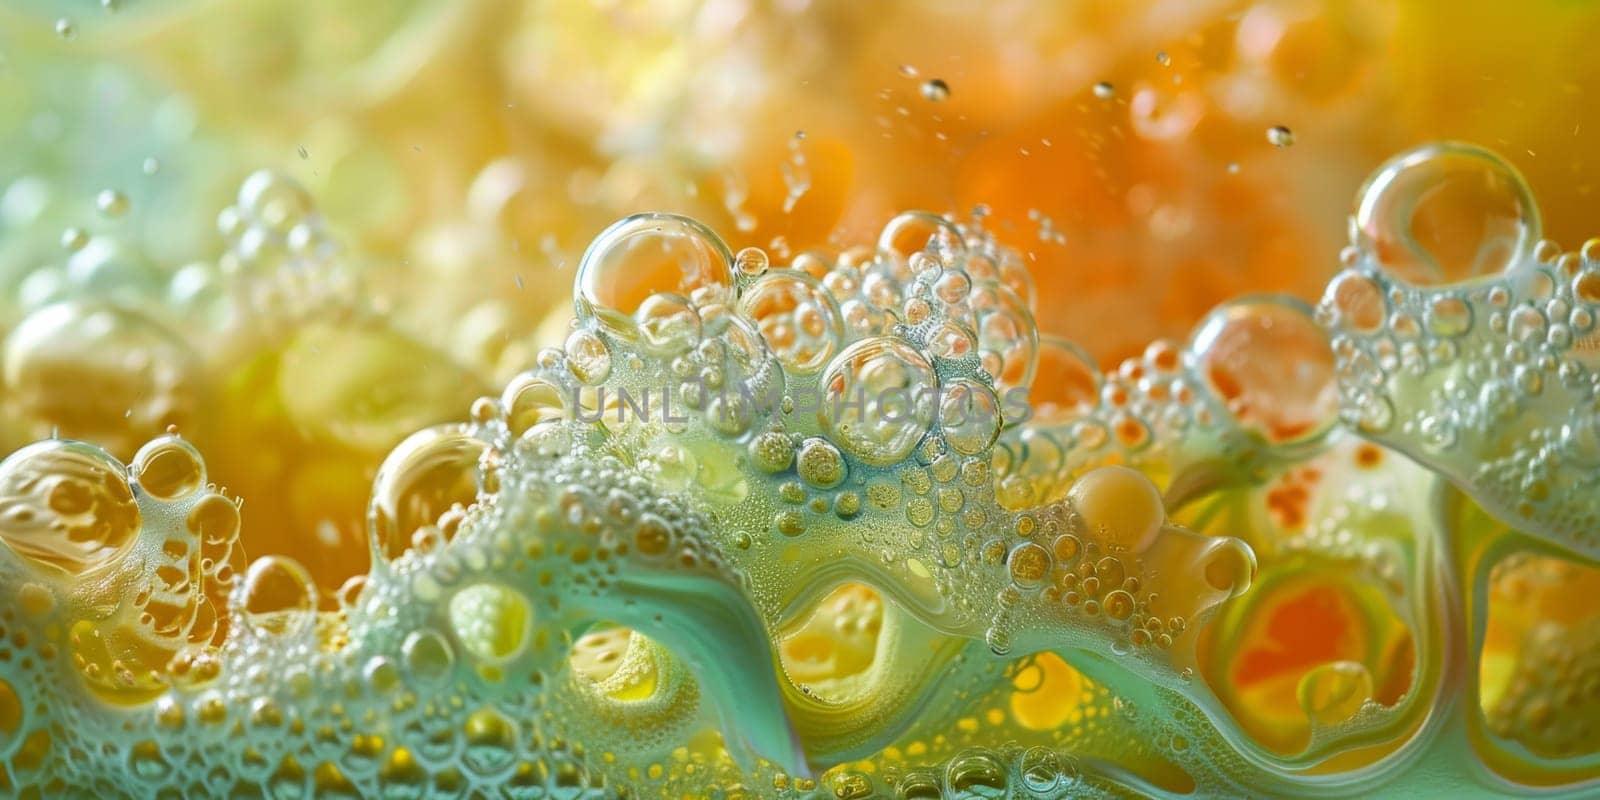 Soap foam or the swirling eddies of ink droplets in water by Kadula